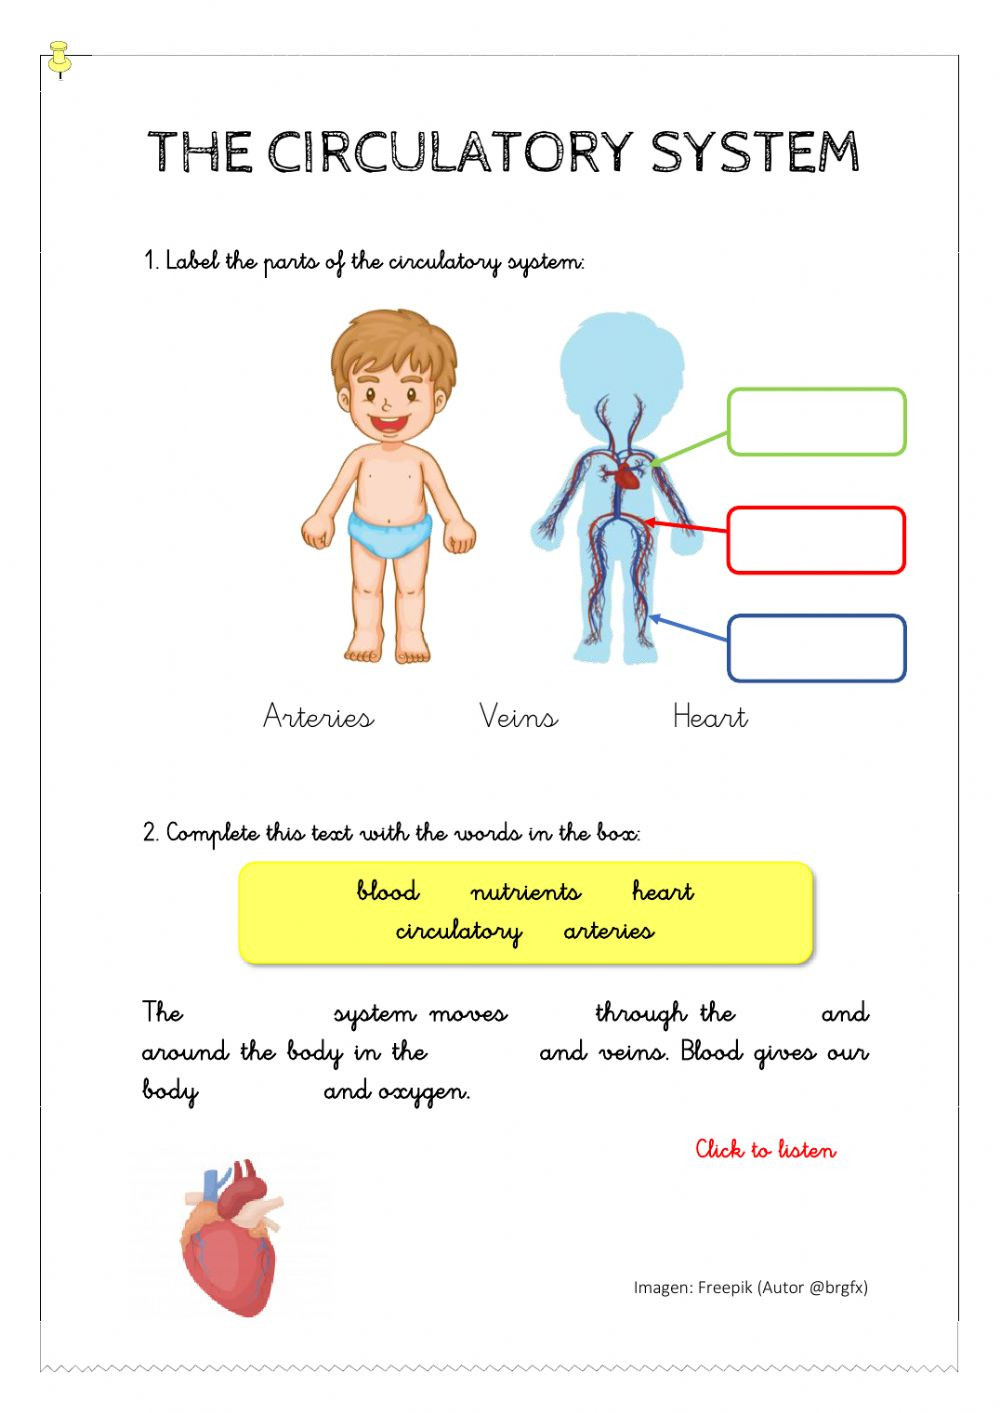 The Circulatory System Worksheet the Circulatory System Interactive Worksheet